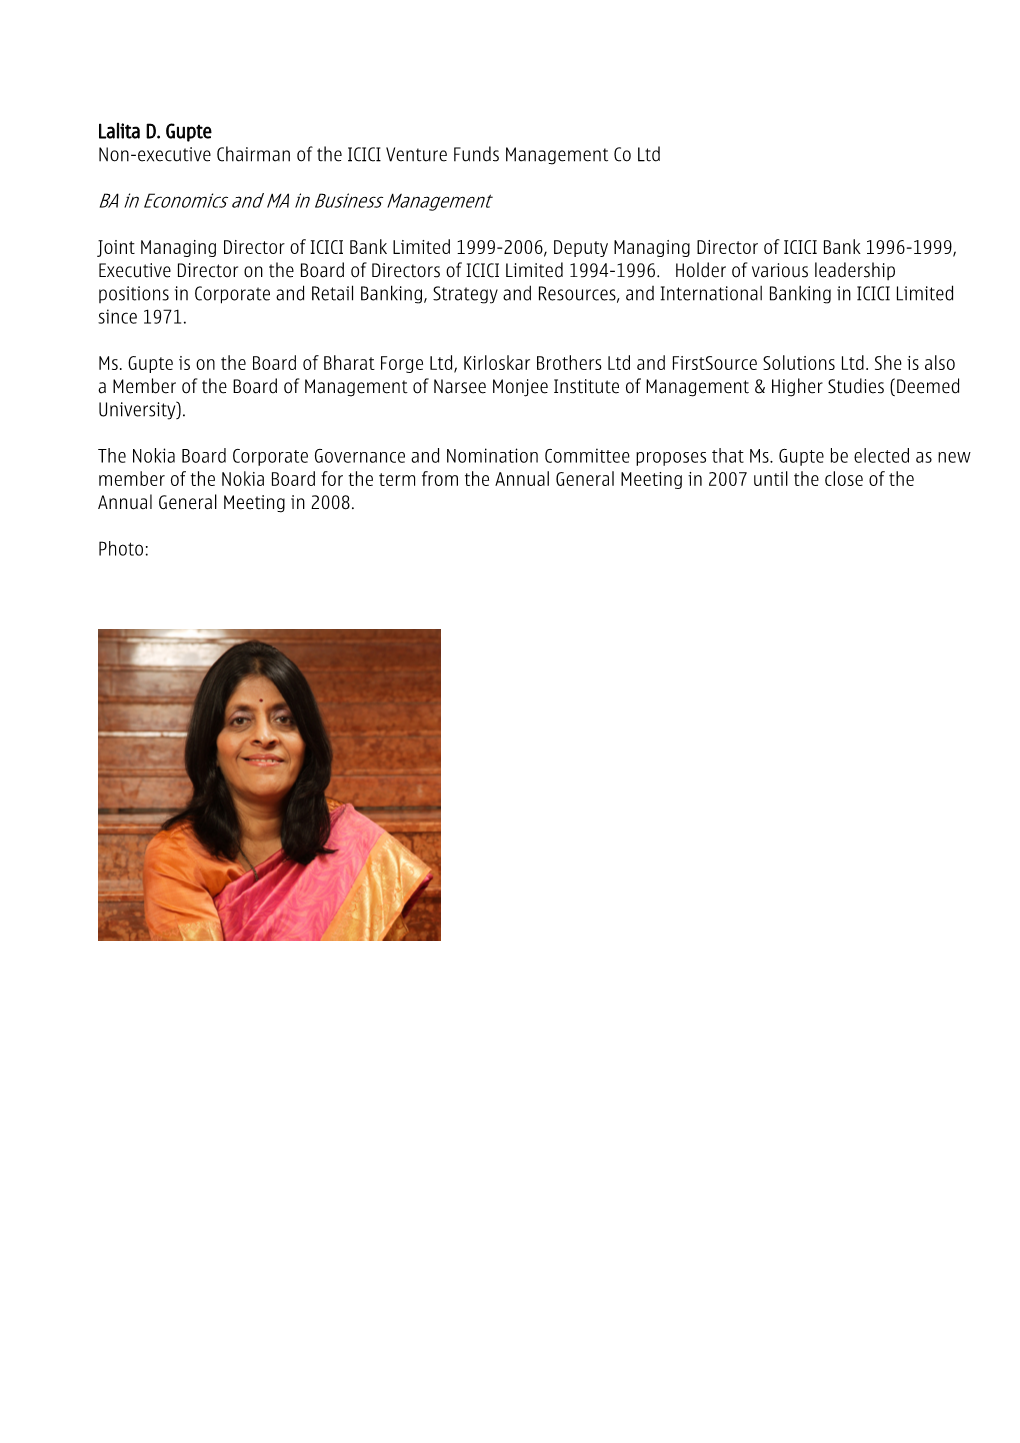 Lalita D. Gupte Non-Executive Chairman of the ICICI Venture Funds Management Co Ltd